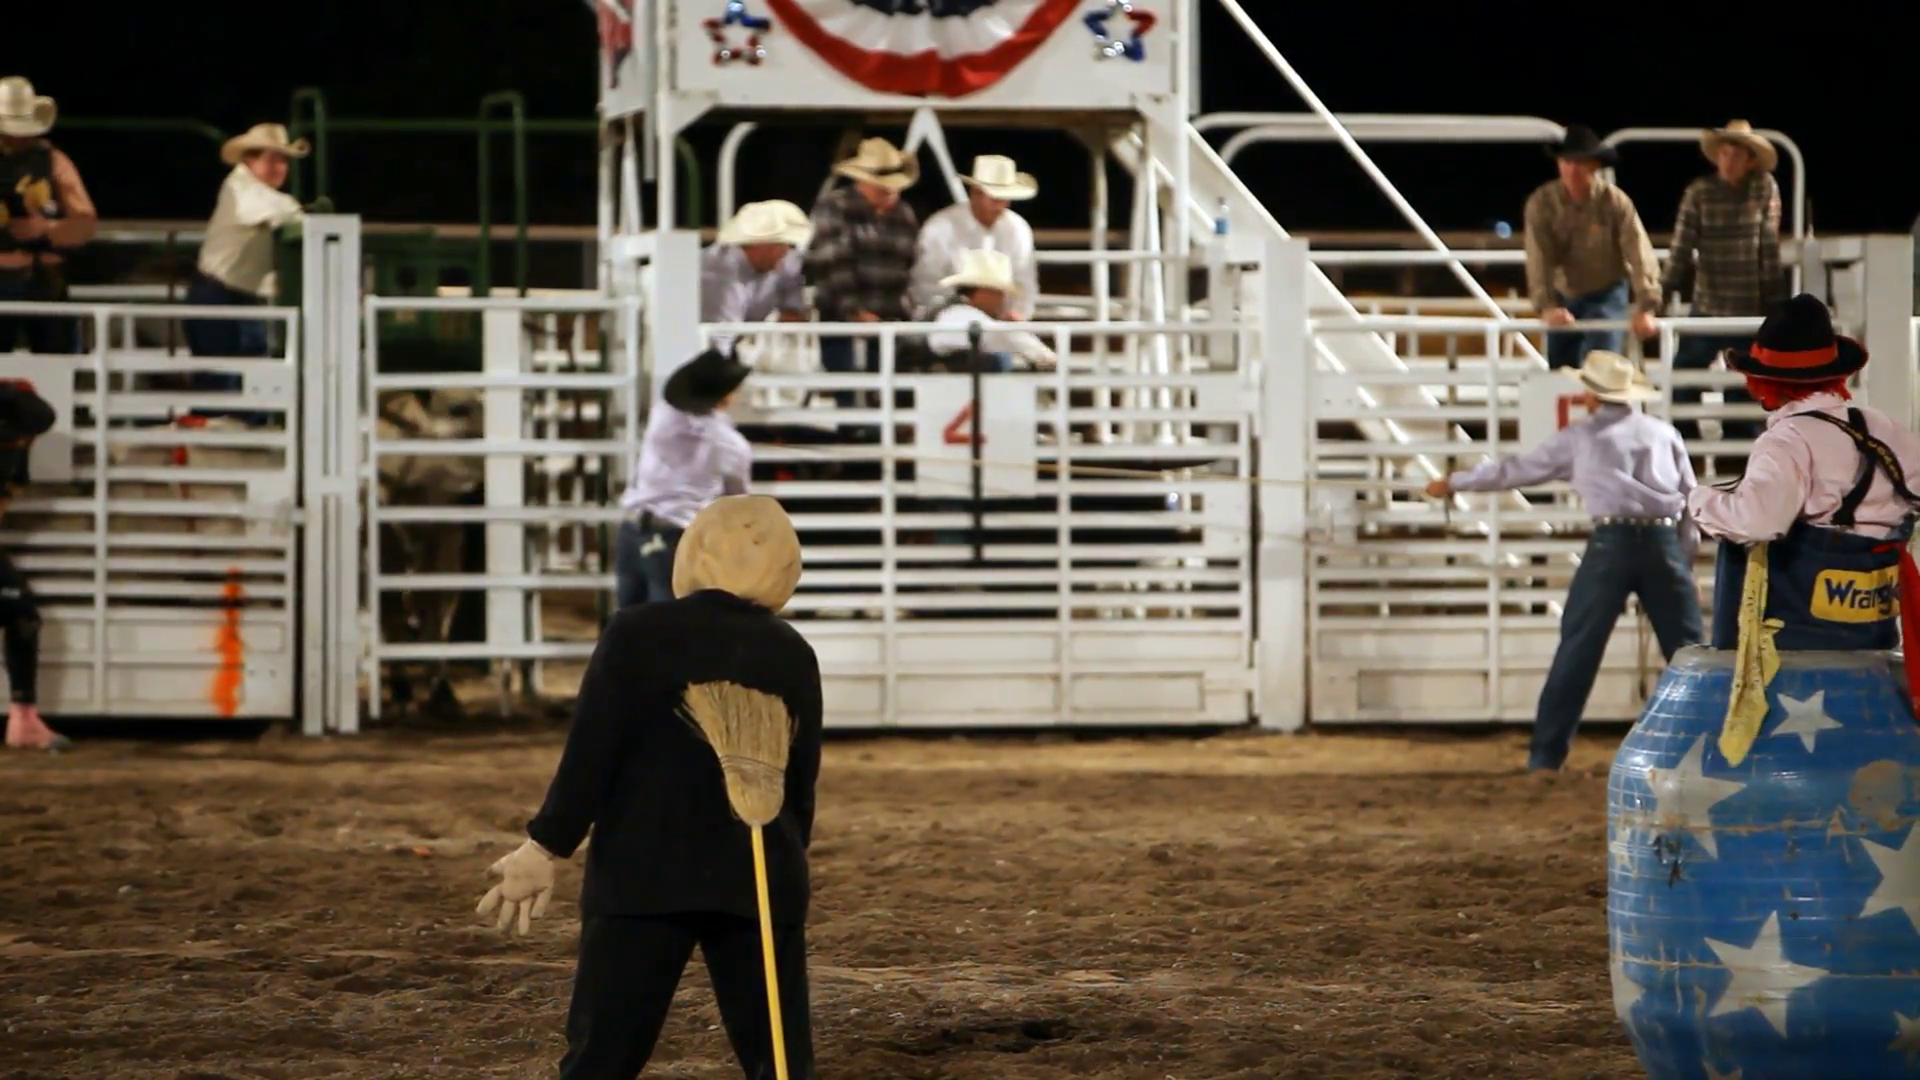 Rodeo Western Cowboy West Wil